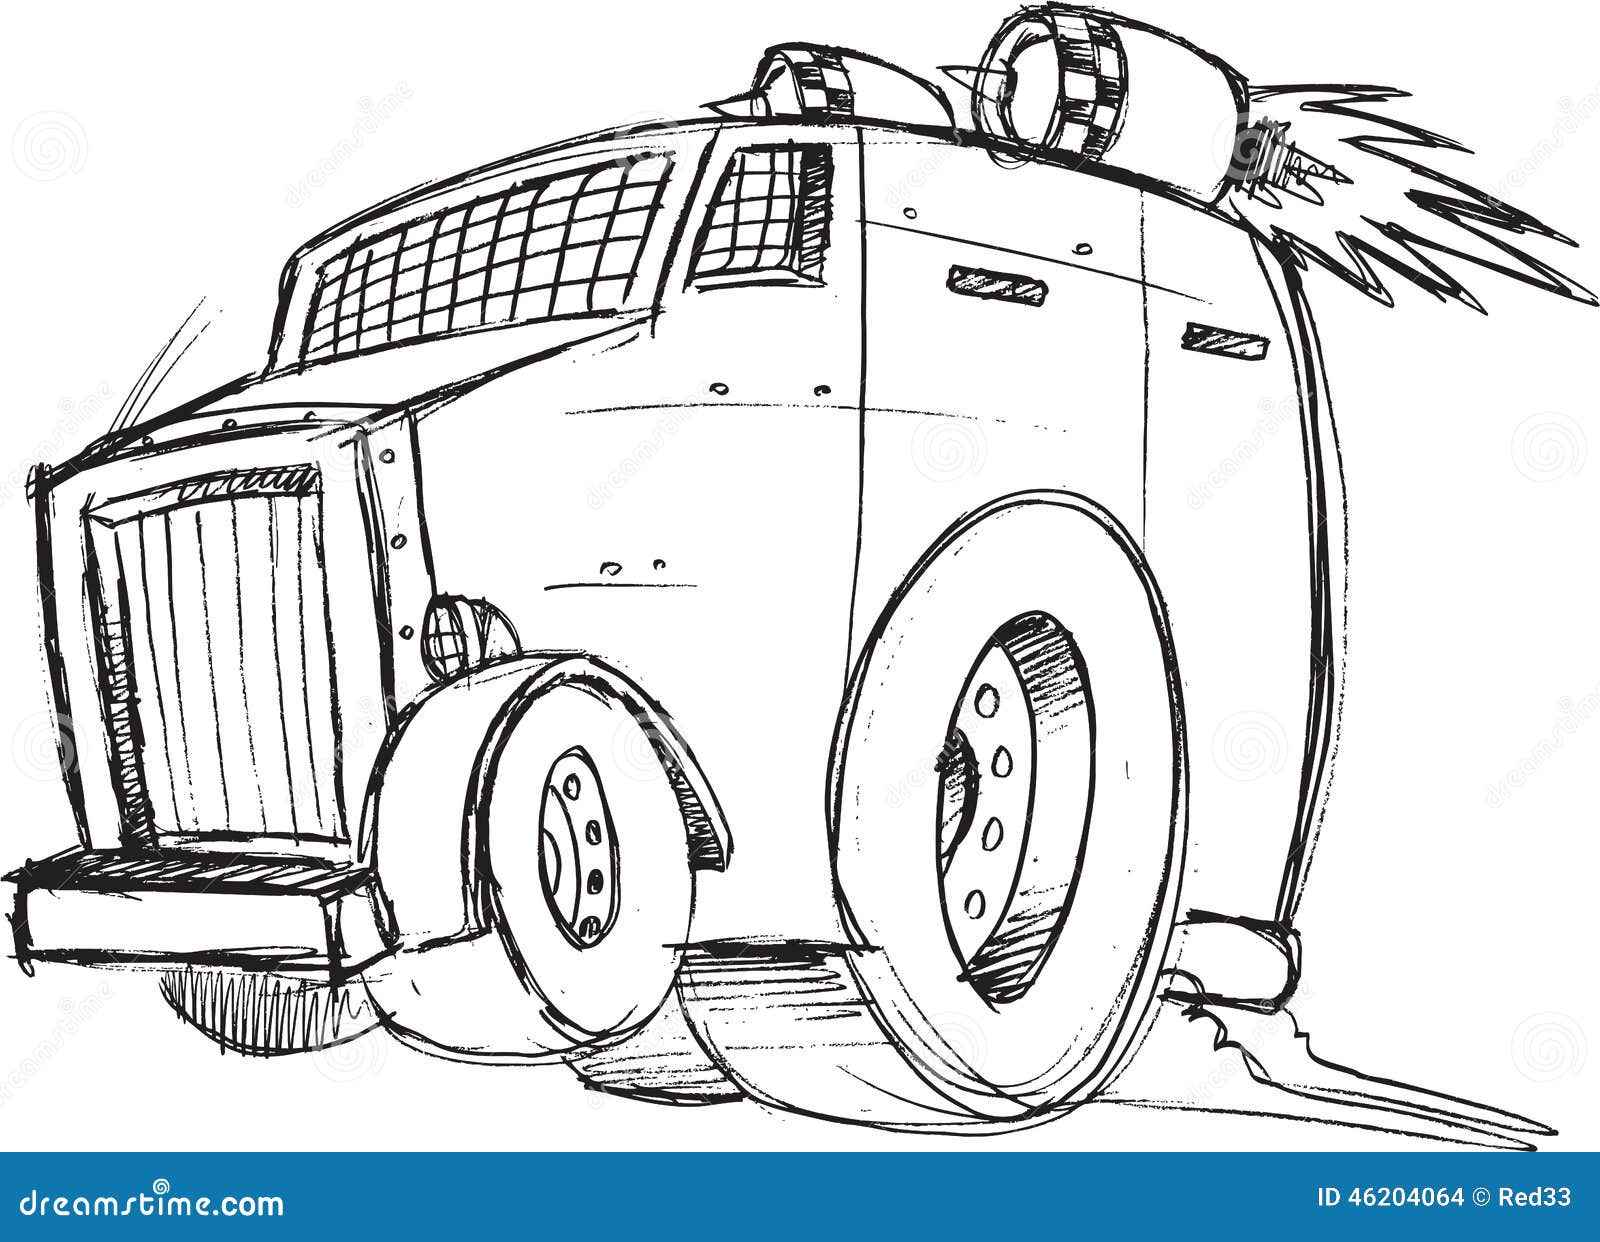 Car Sketch PNG Image, Sketch Car Pictures, Sketch Car Vector Material, Sketch  Car Template Download, Sketch Car PNG Image For Free Download